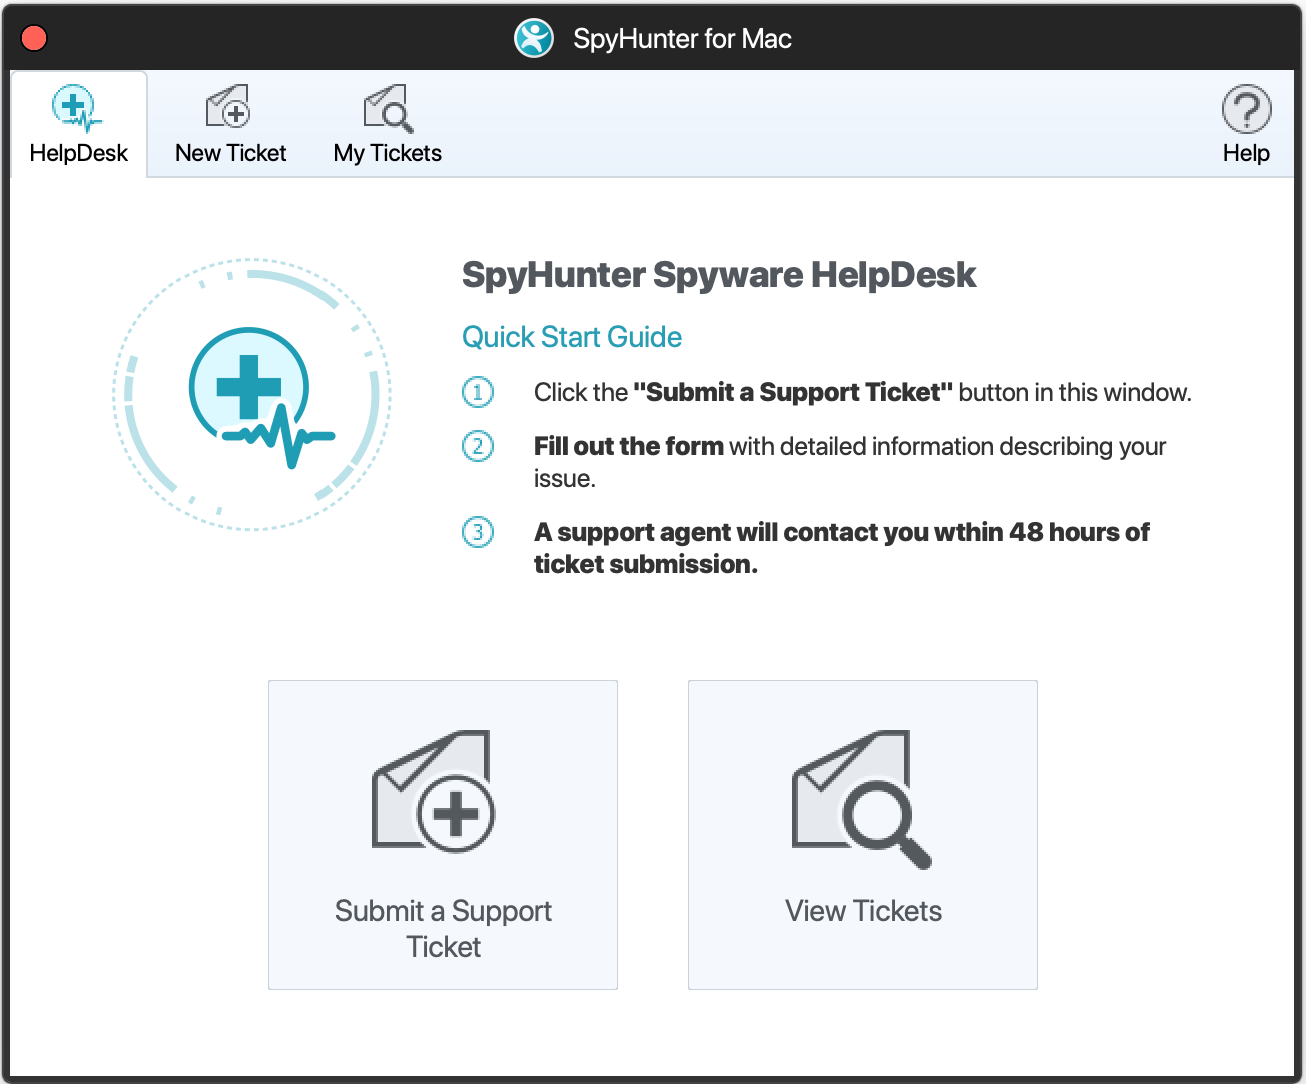 SpyHunter for Mac HelpDesk